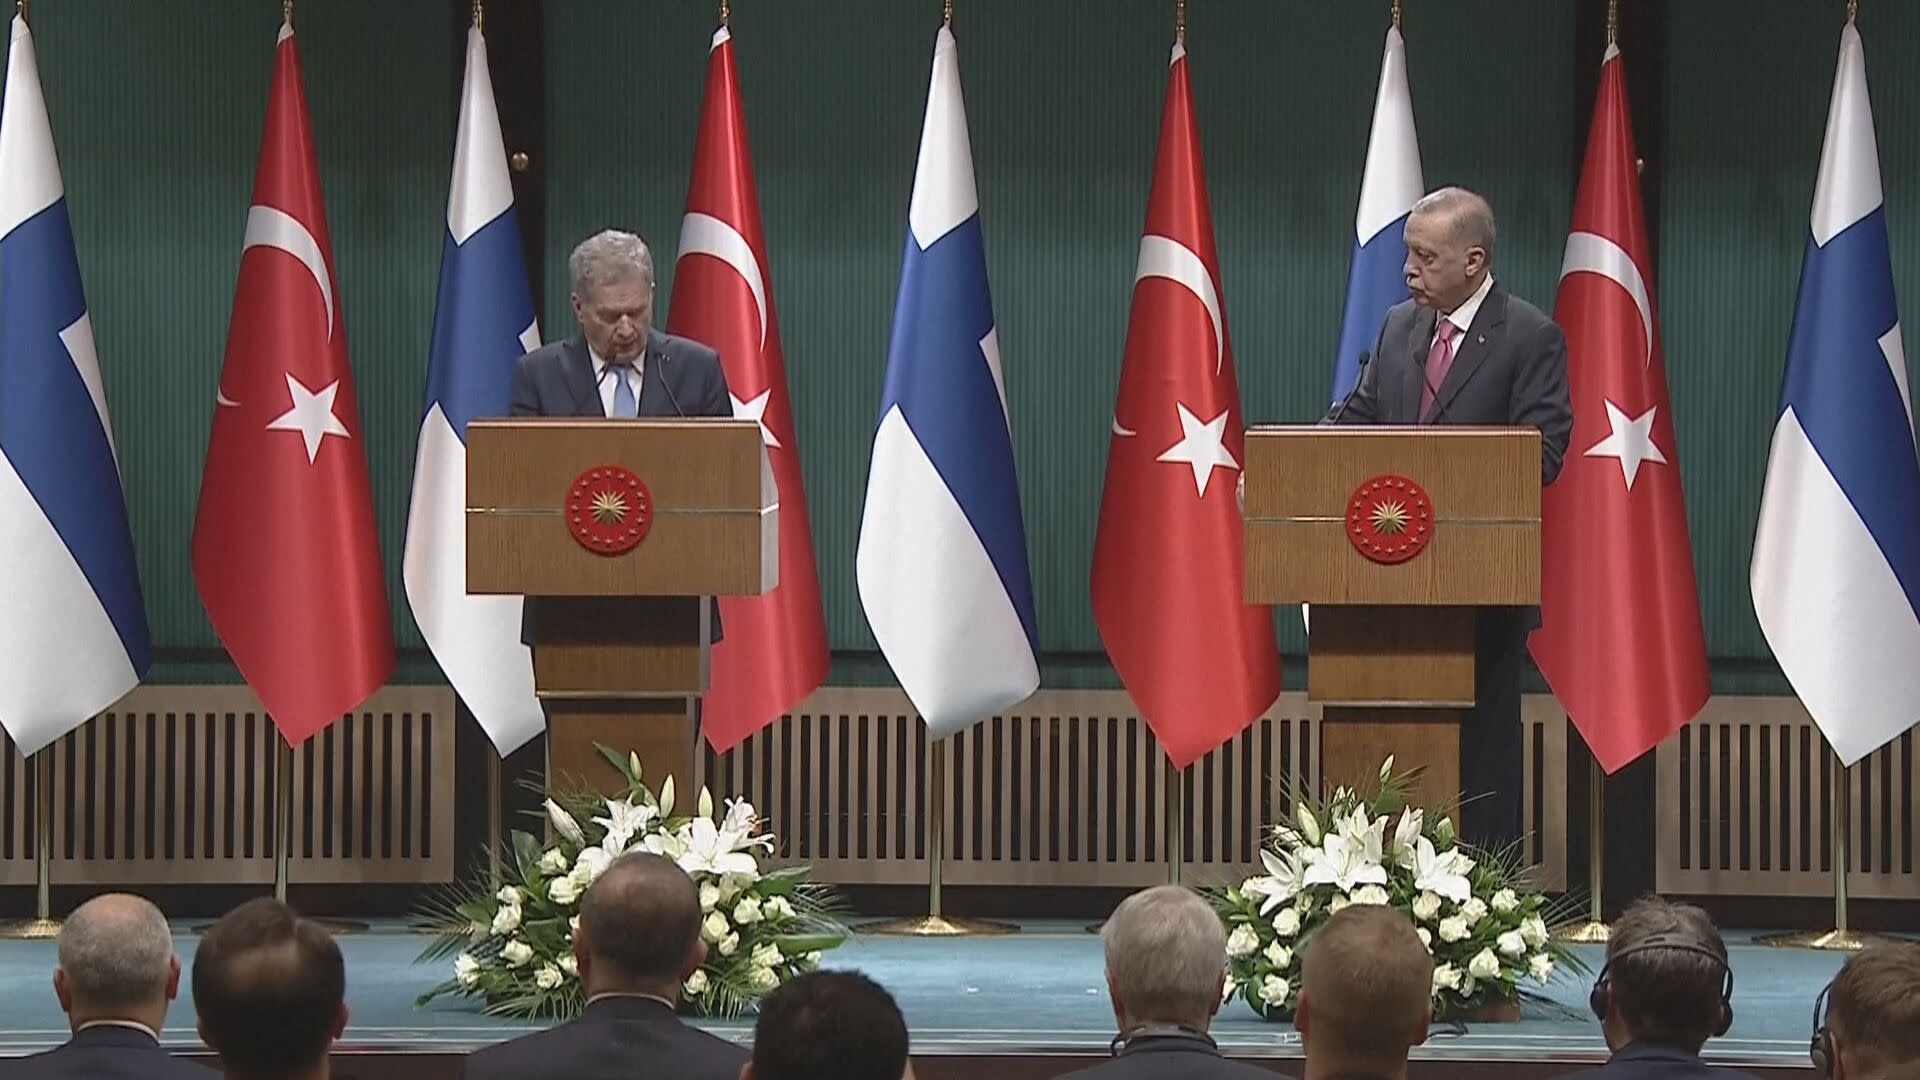 Turkey is starting to ratify Finland’s NATO membership, Erdogan says